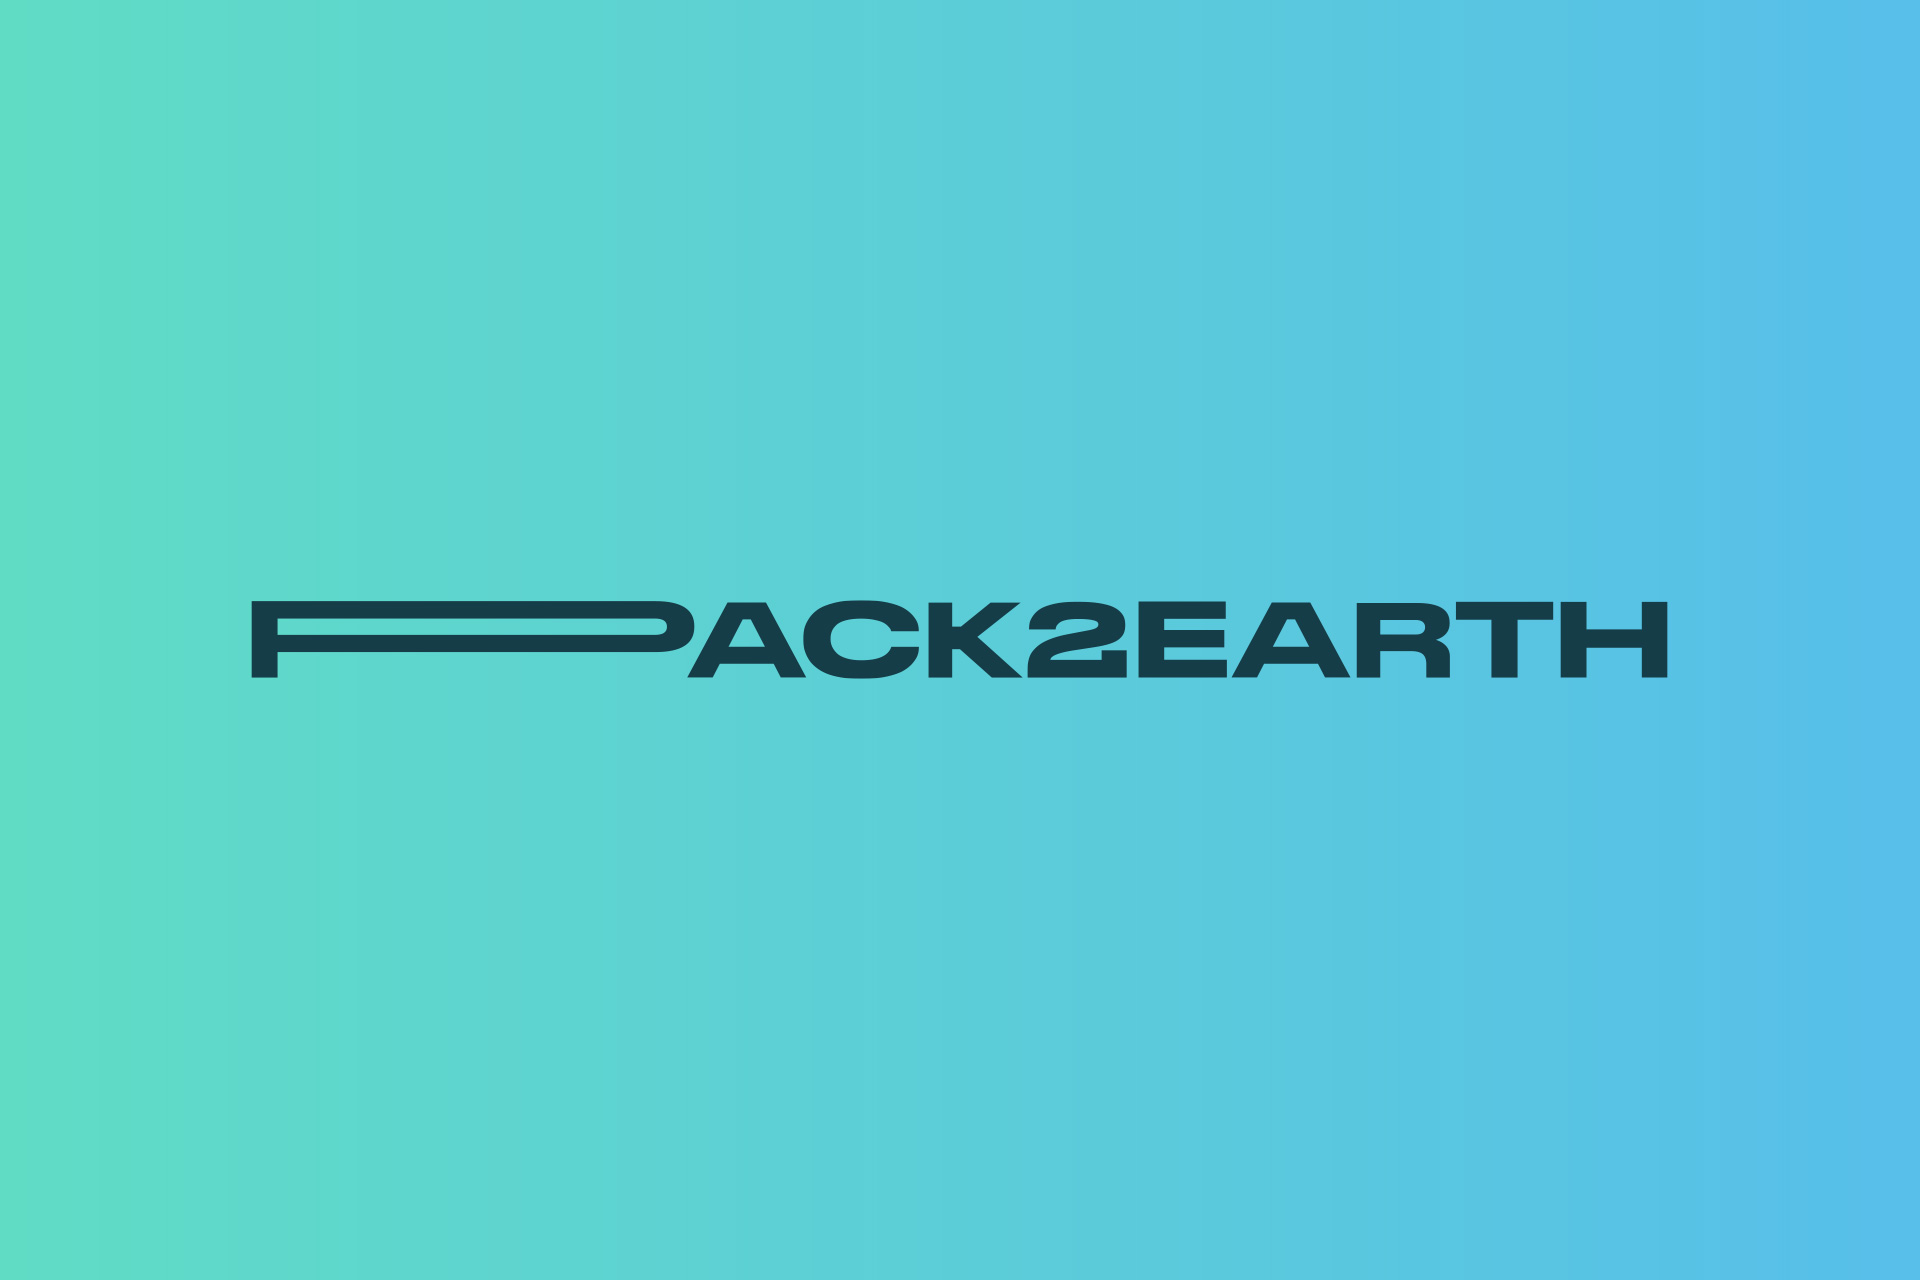 Caso de estudio branding Pack2Earth